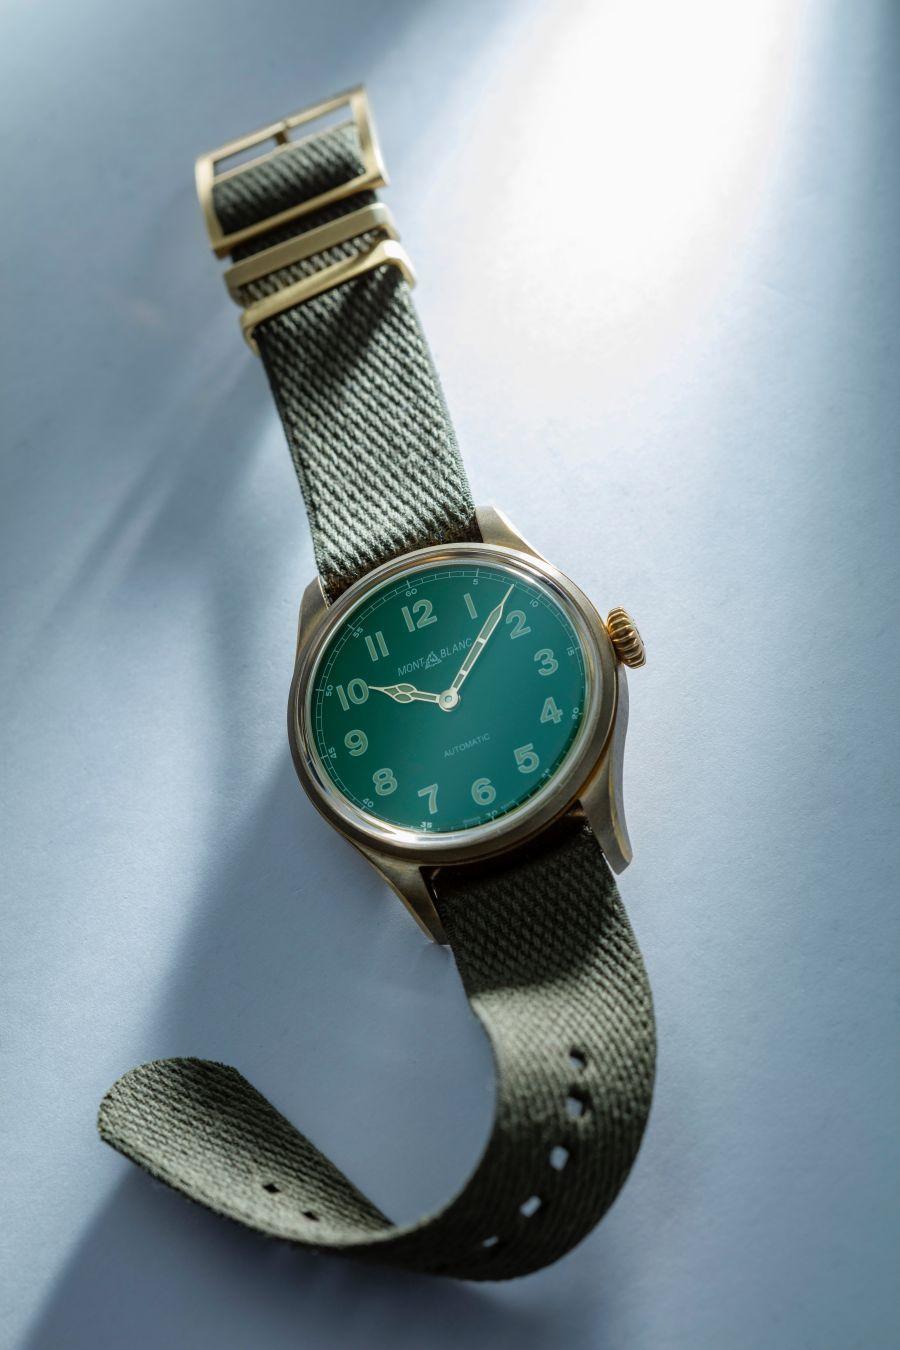 MONTBLANC 1858 Automatic Limited Edition青銅綠面限量錶款，這款歷史感十足的手錶外型，重現1930年代的軍風腕錶的設計風格。然而以今日眼光來看又顯得極為時尚，也突顯其歷久彌新的經典價值。同時，青銅錶殼隨佩戴者的生活習慣改變色澤，更增添個人特色。限量1,858只。 功能：時、分指示；自動上鏈機芯；定價約NT$101,000。